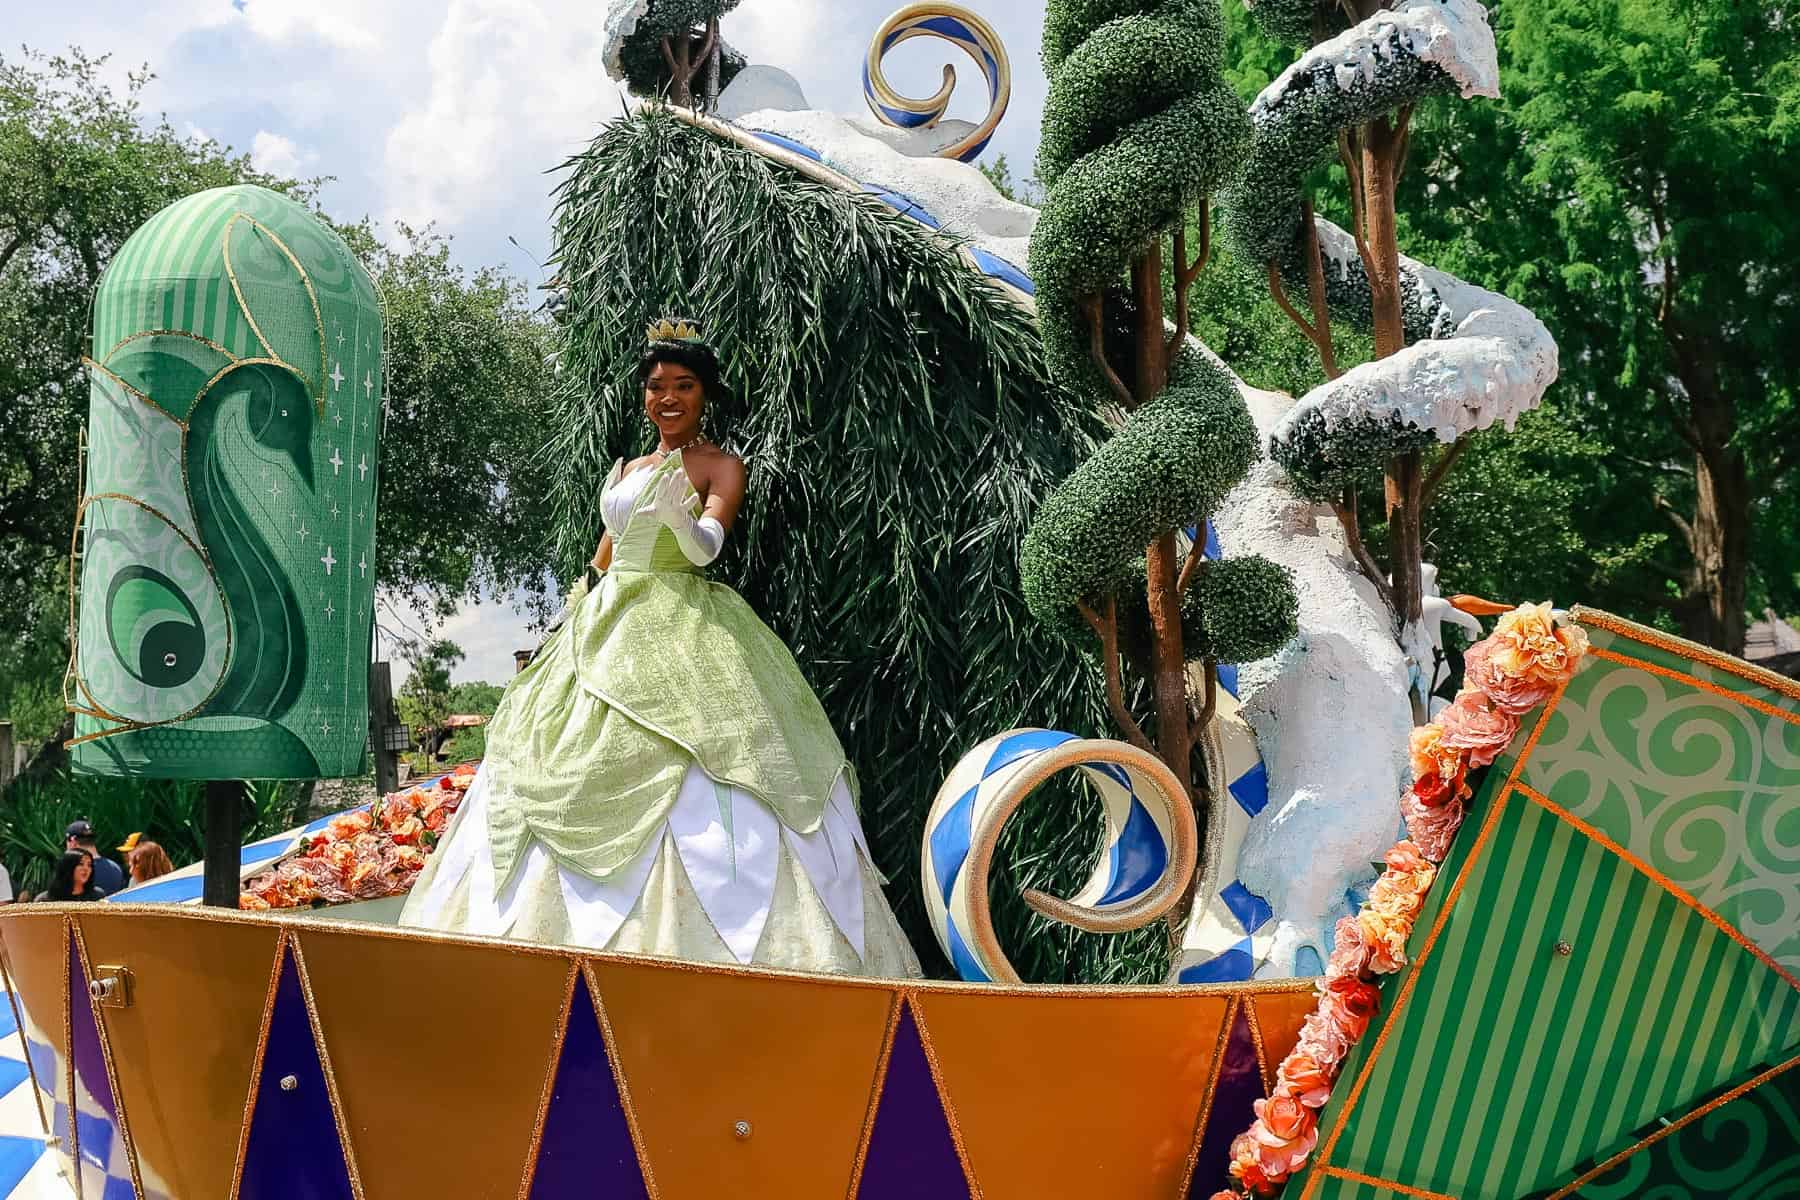 Princess Tiana toward the back of the Festival of Fantasy Princess float. 